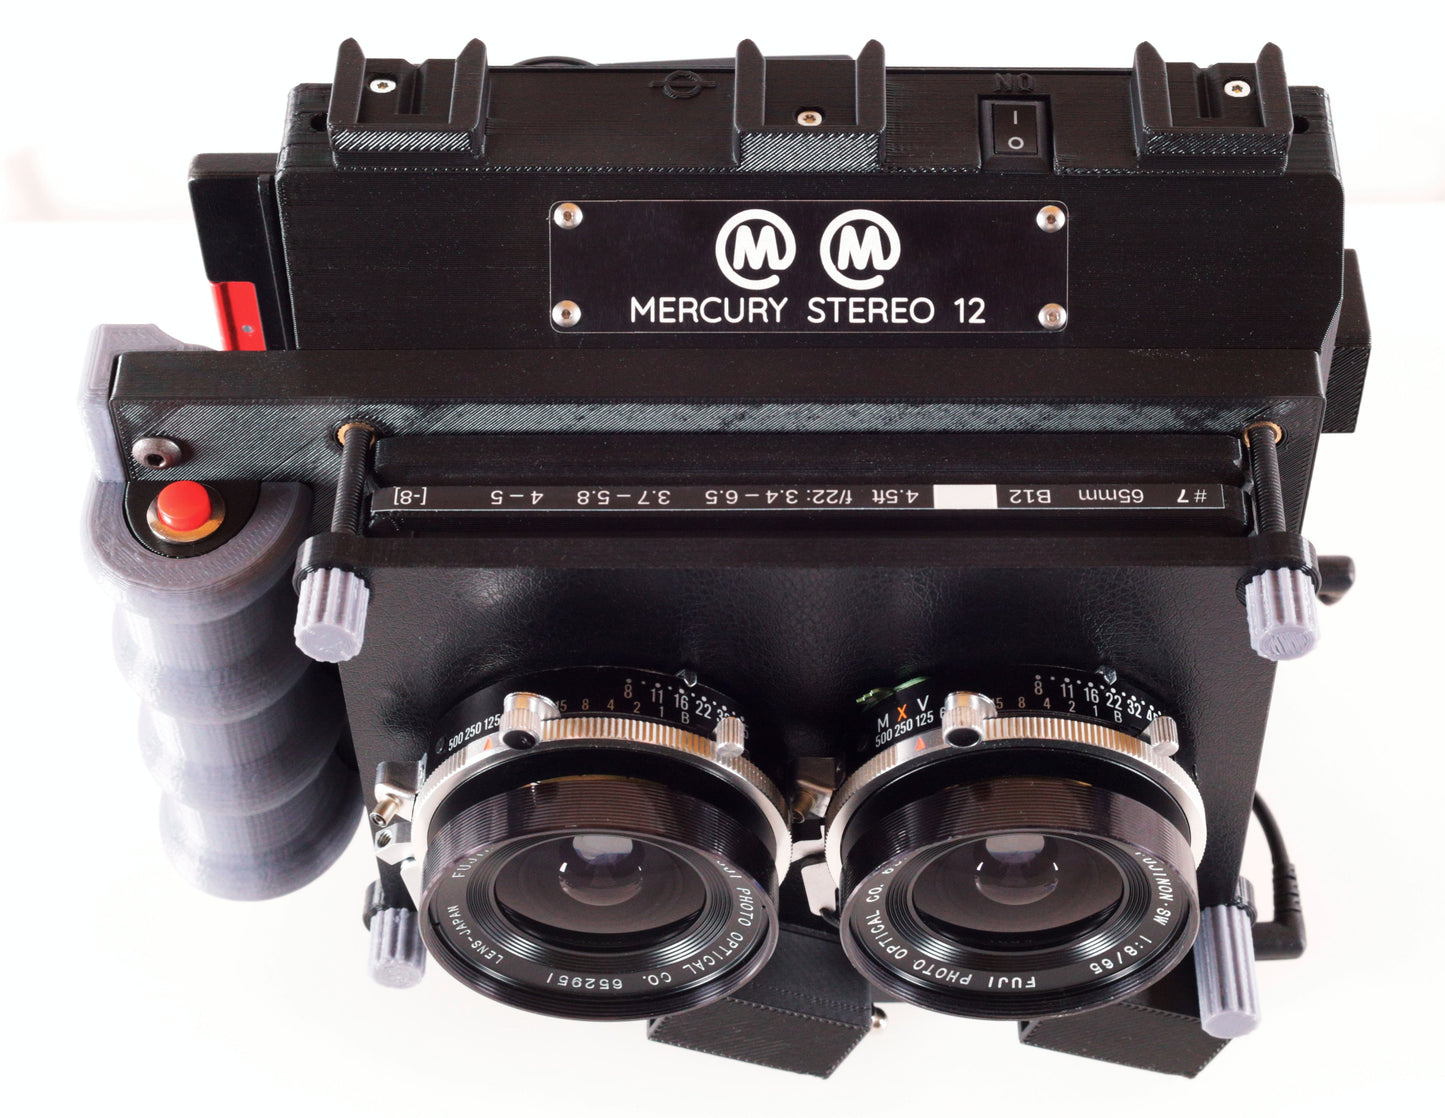 Mercury Stereo 12 Camera - Deluxe Kit